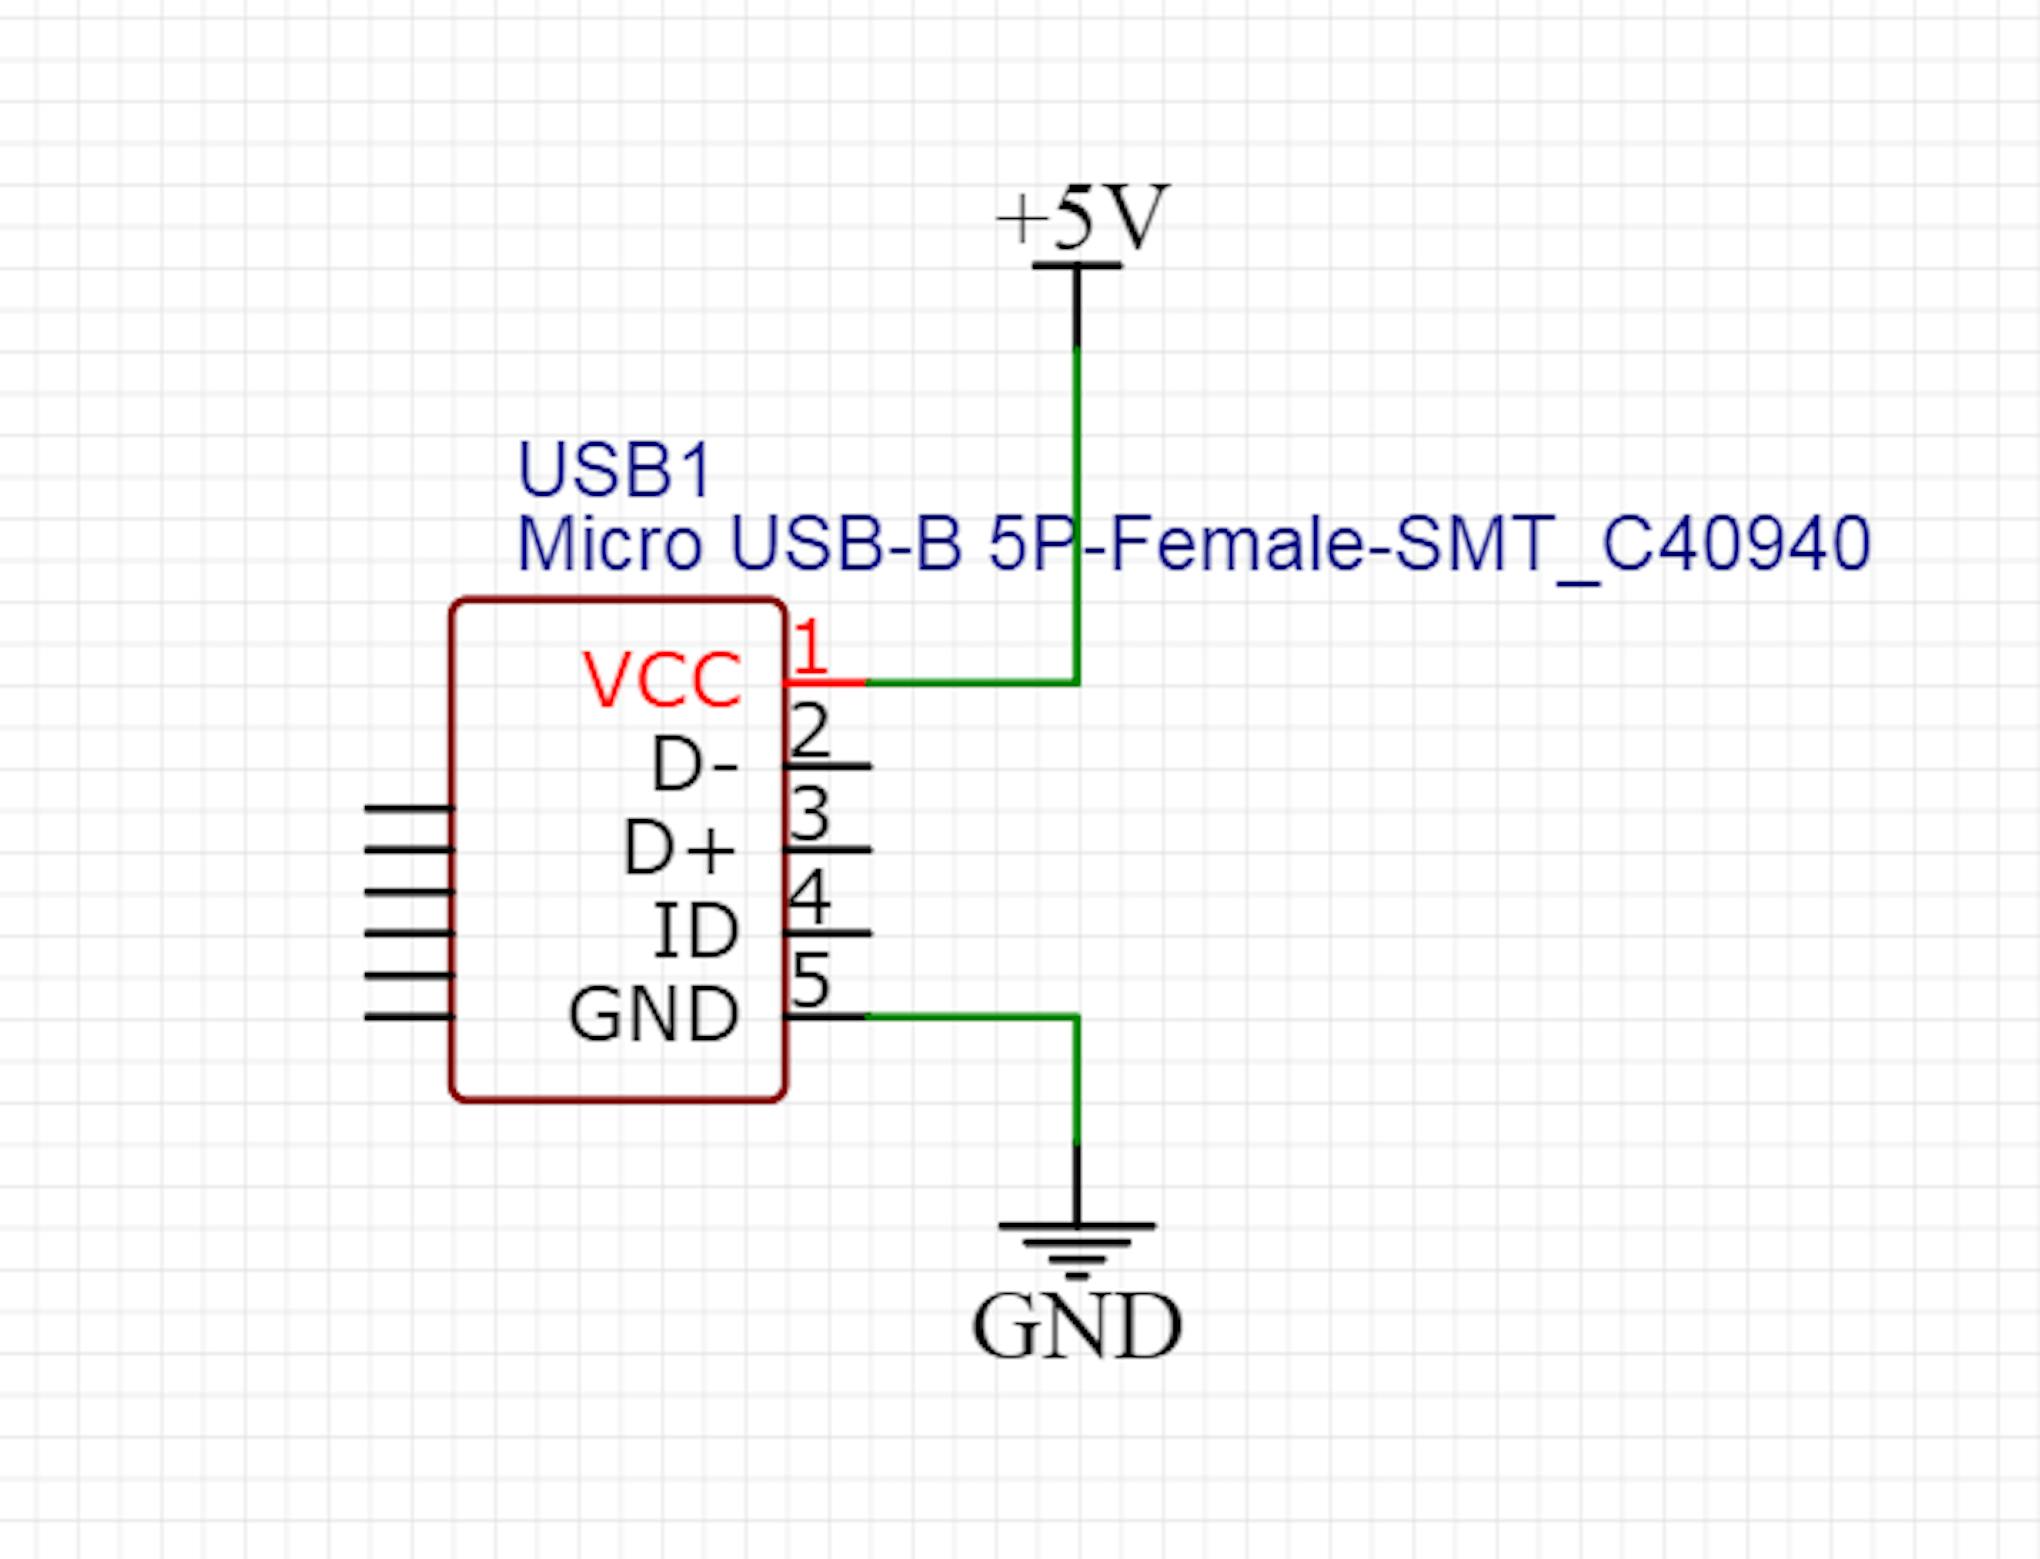 Micro USB-B 5P-Female-SMT in EasyEDA.